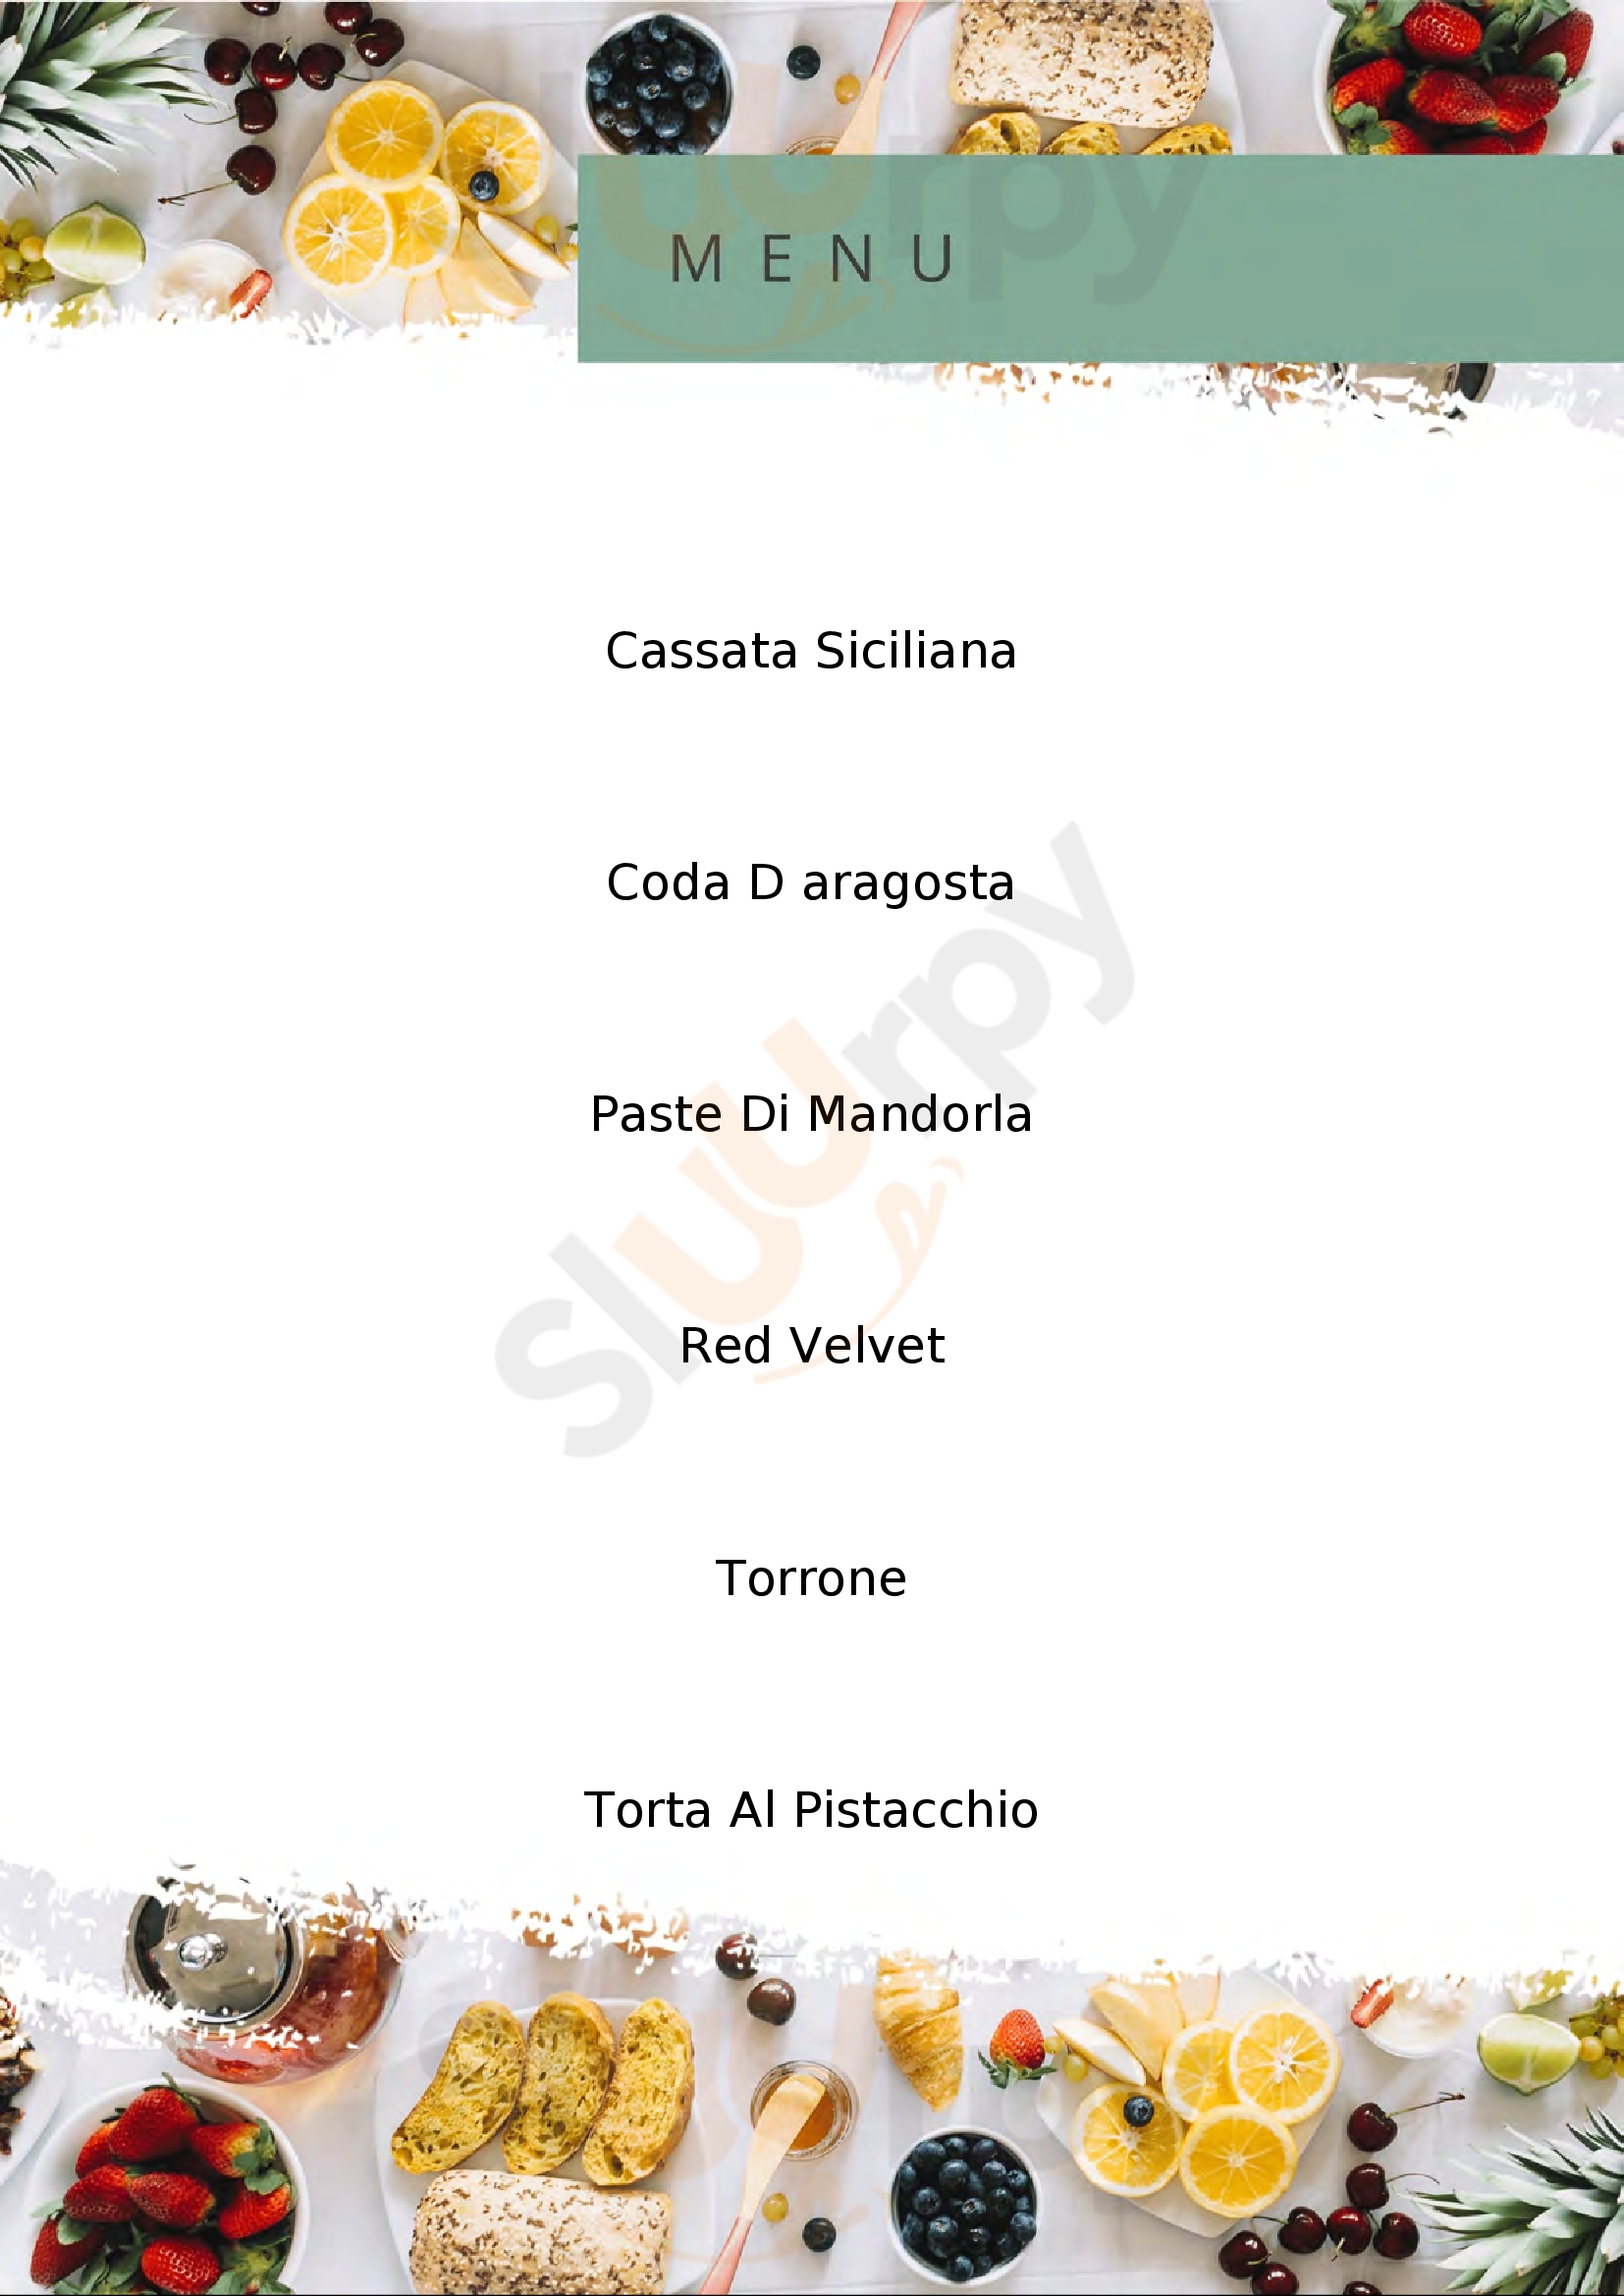 Pasticceria Fiore Caserta menù 1 pagina